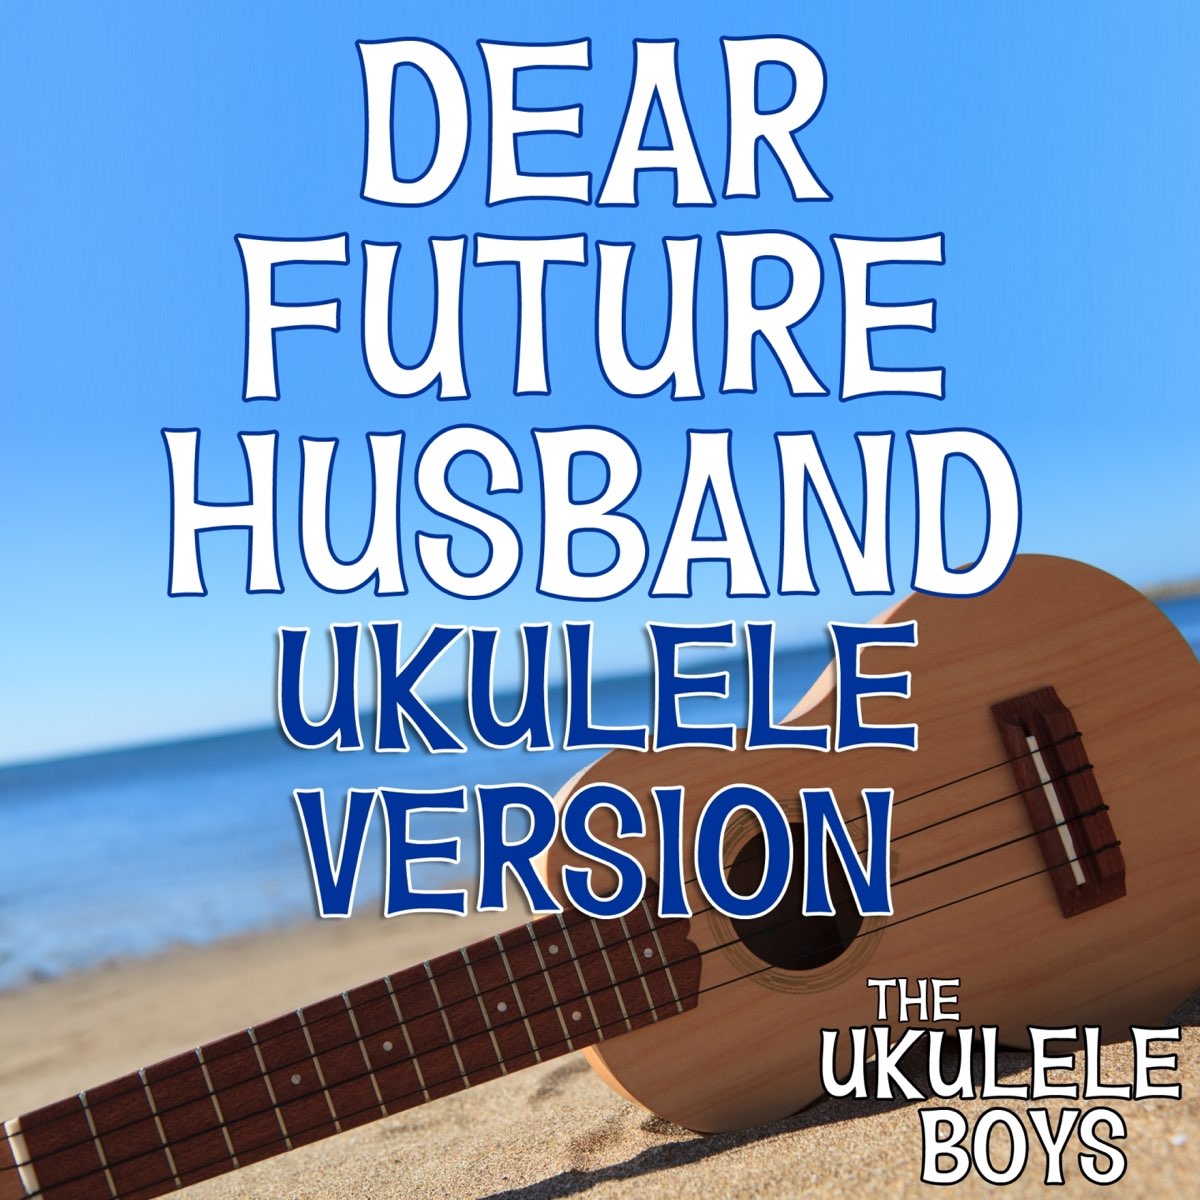 Dear future. Boy with uke альбомы. Uke boy. Boy with Ukulele. Boy with uke обложки альбомов.